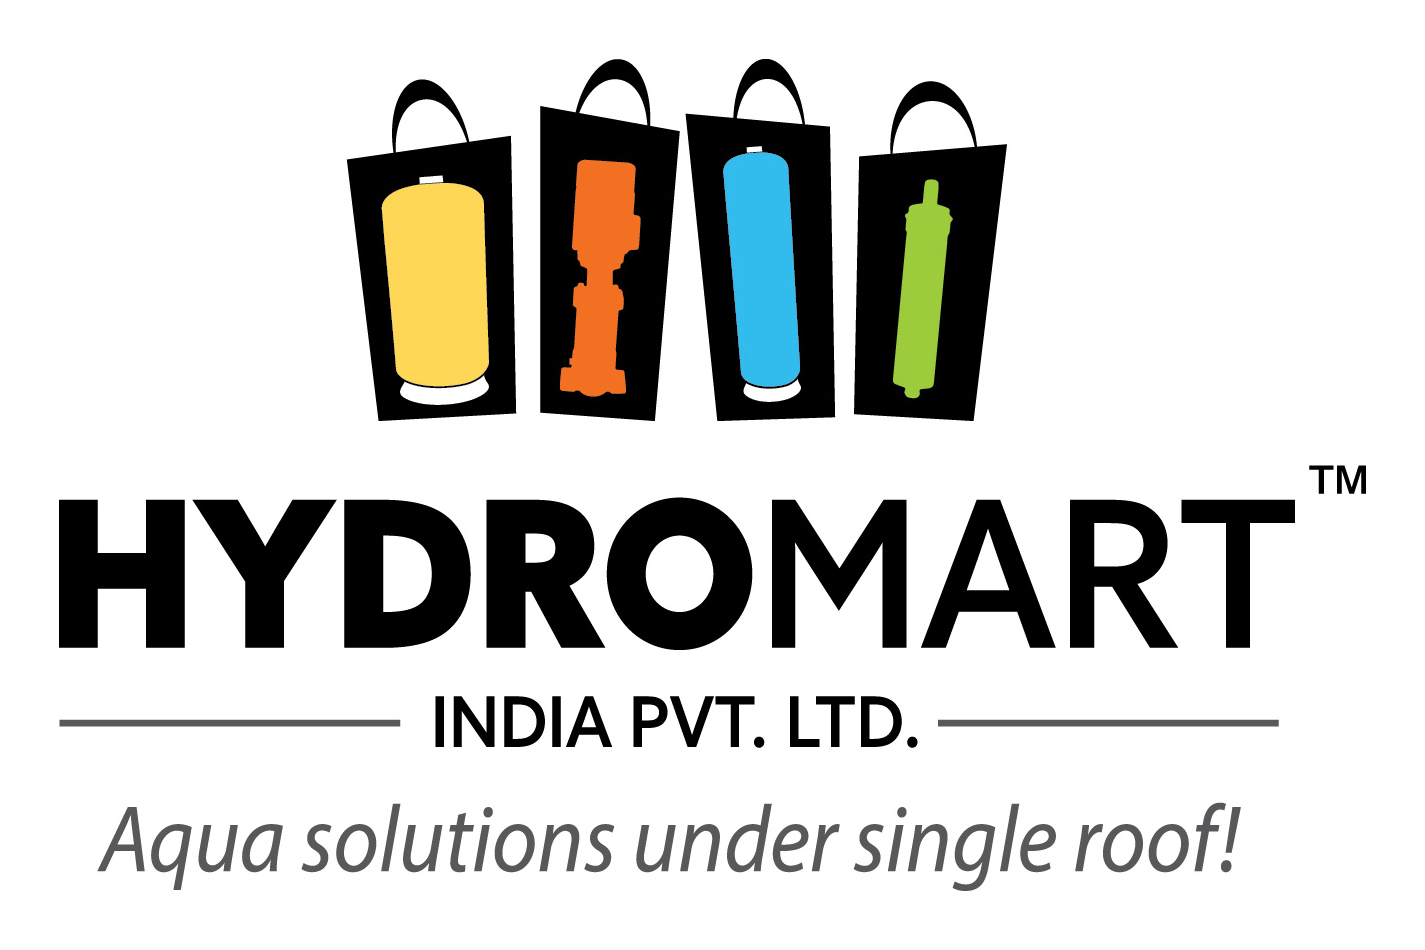 HYDROMART INDIA PVT LTD